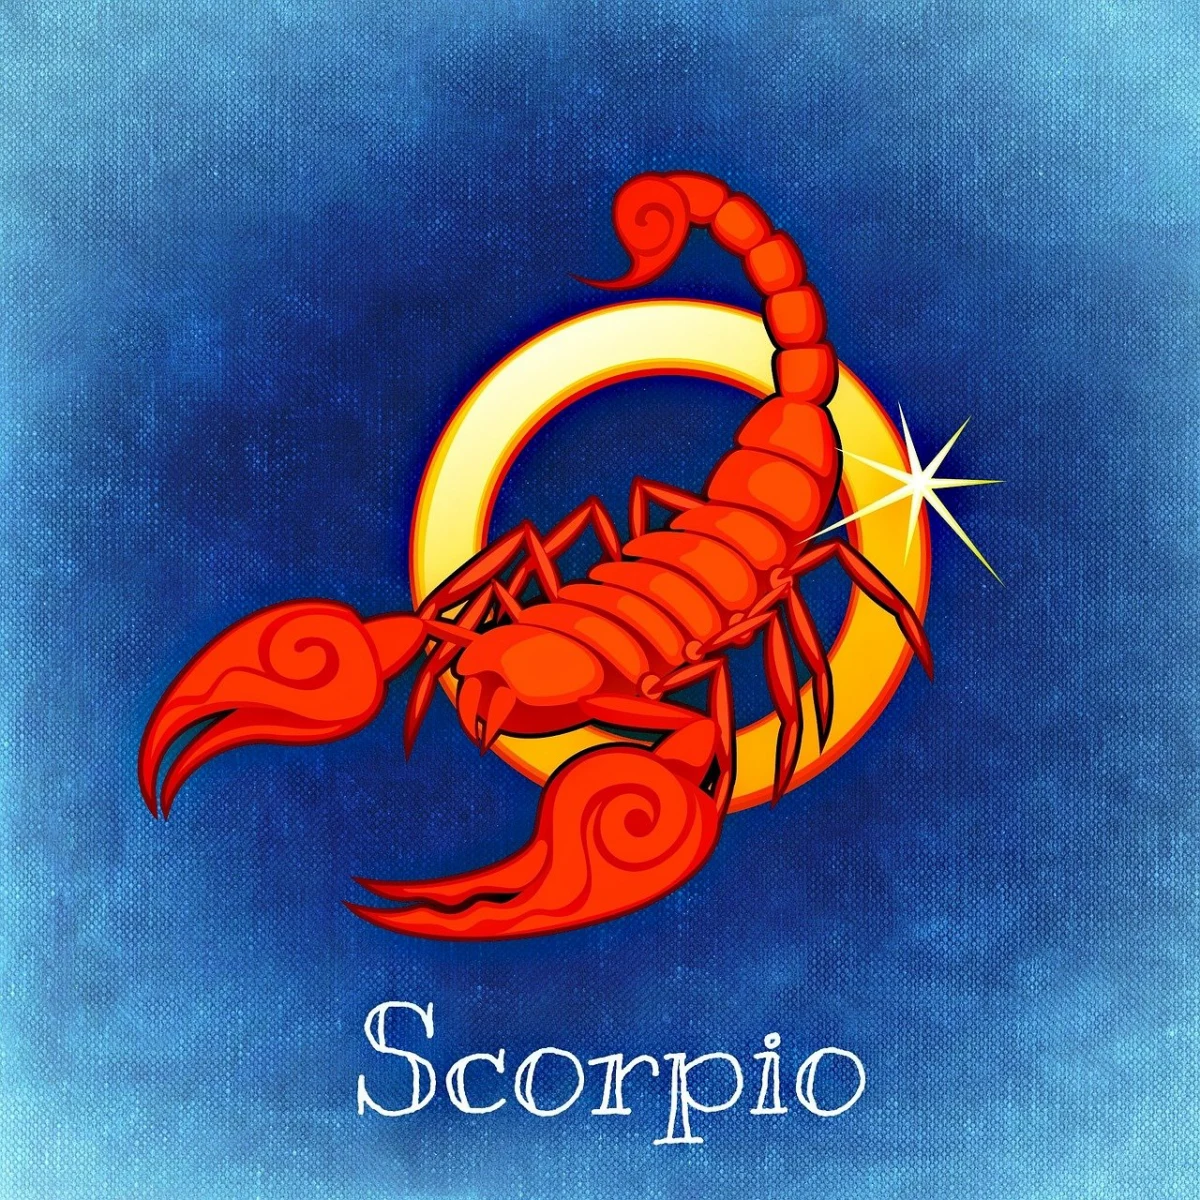 pleine lune 1 aout horoscope scorpion